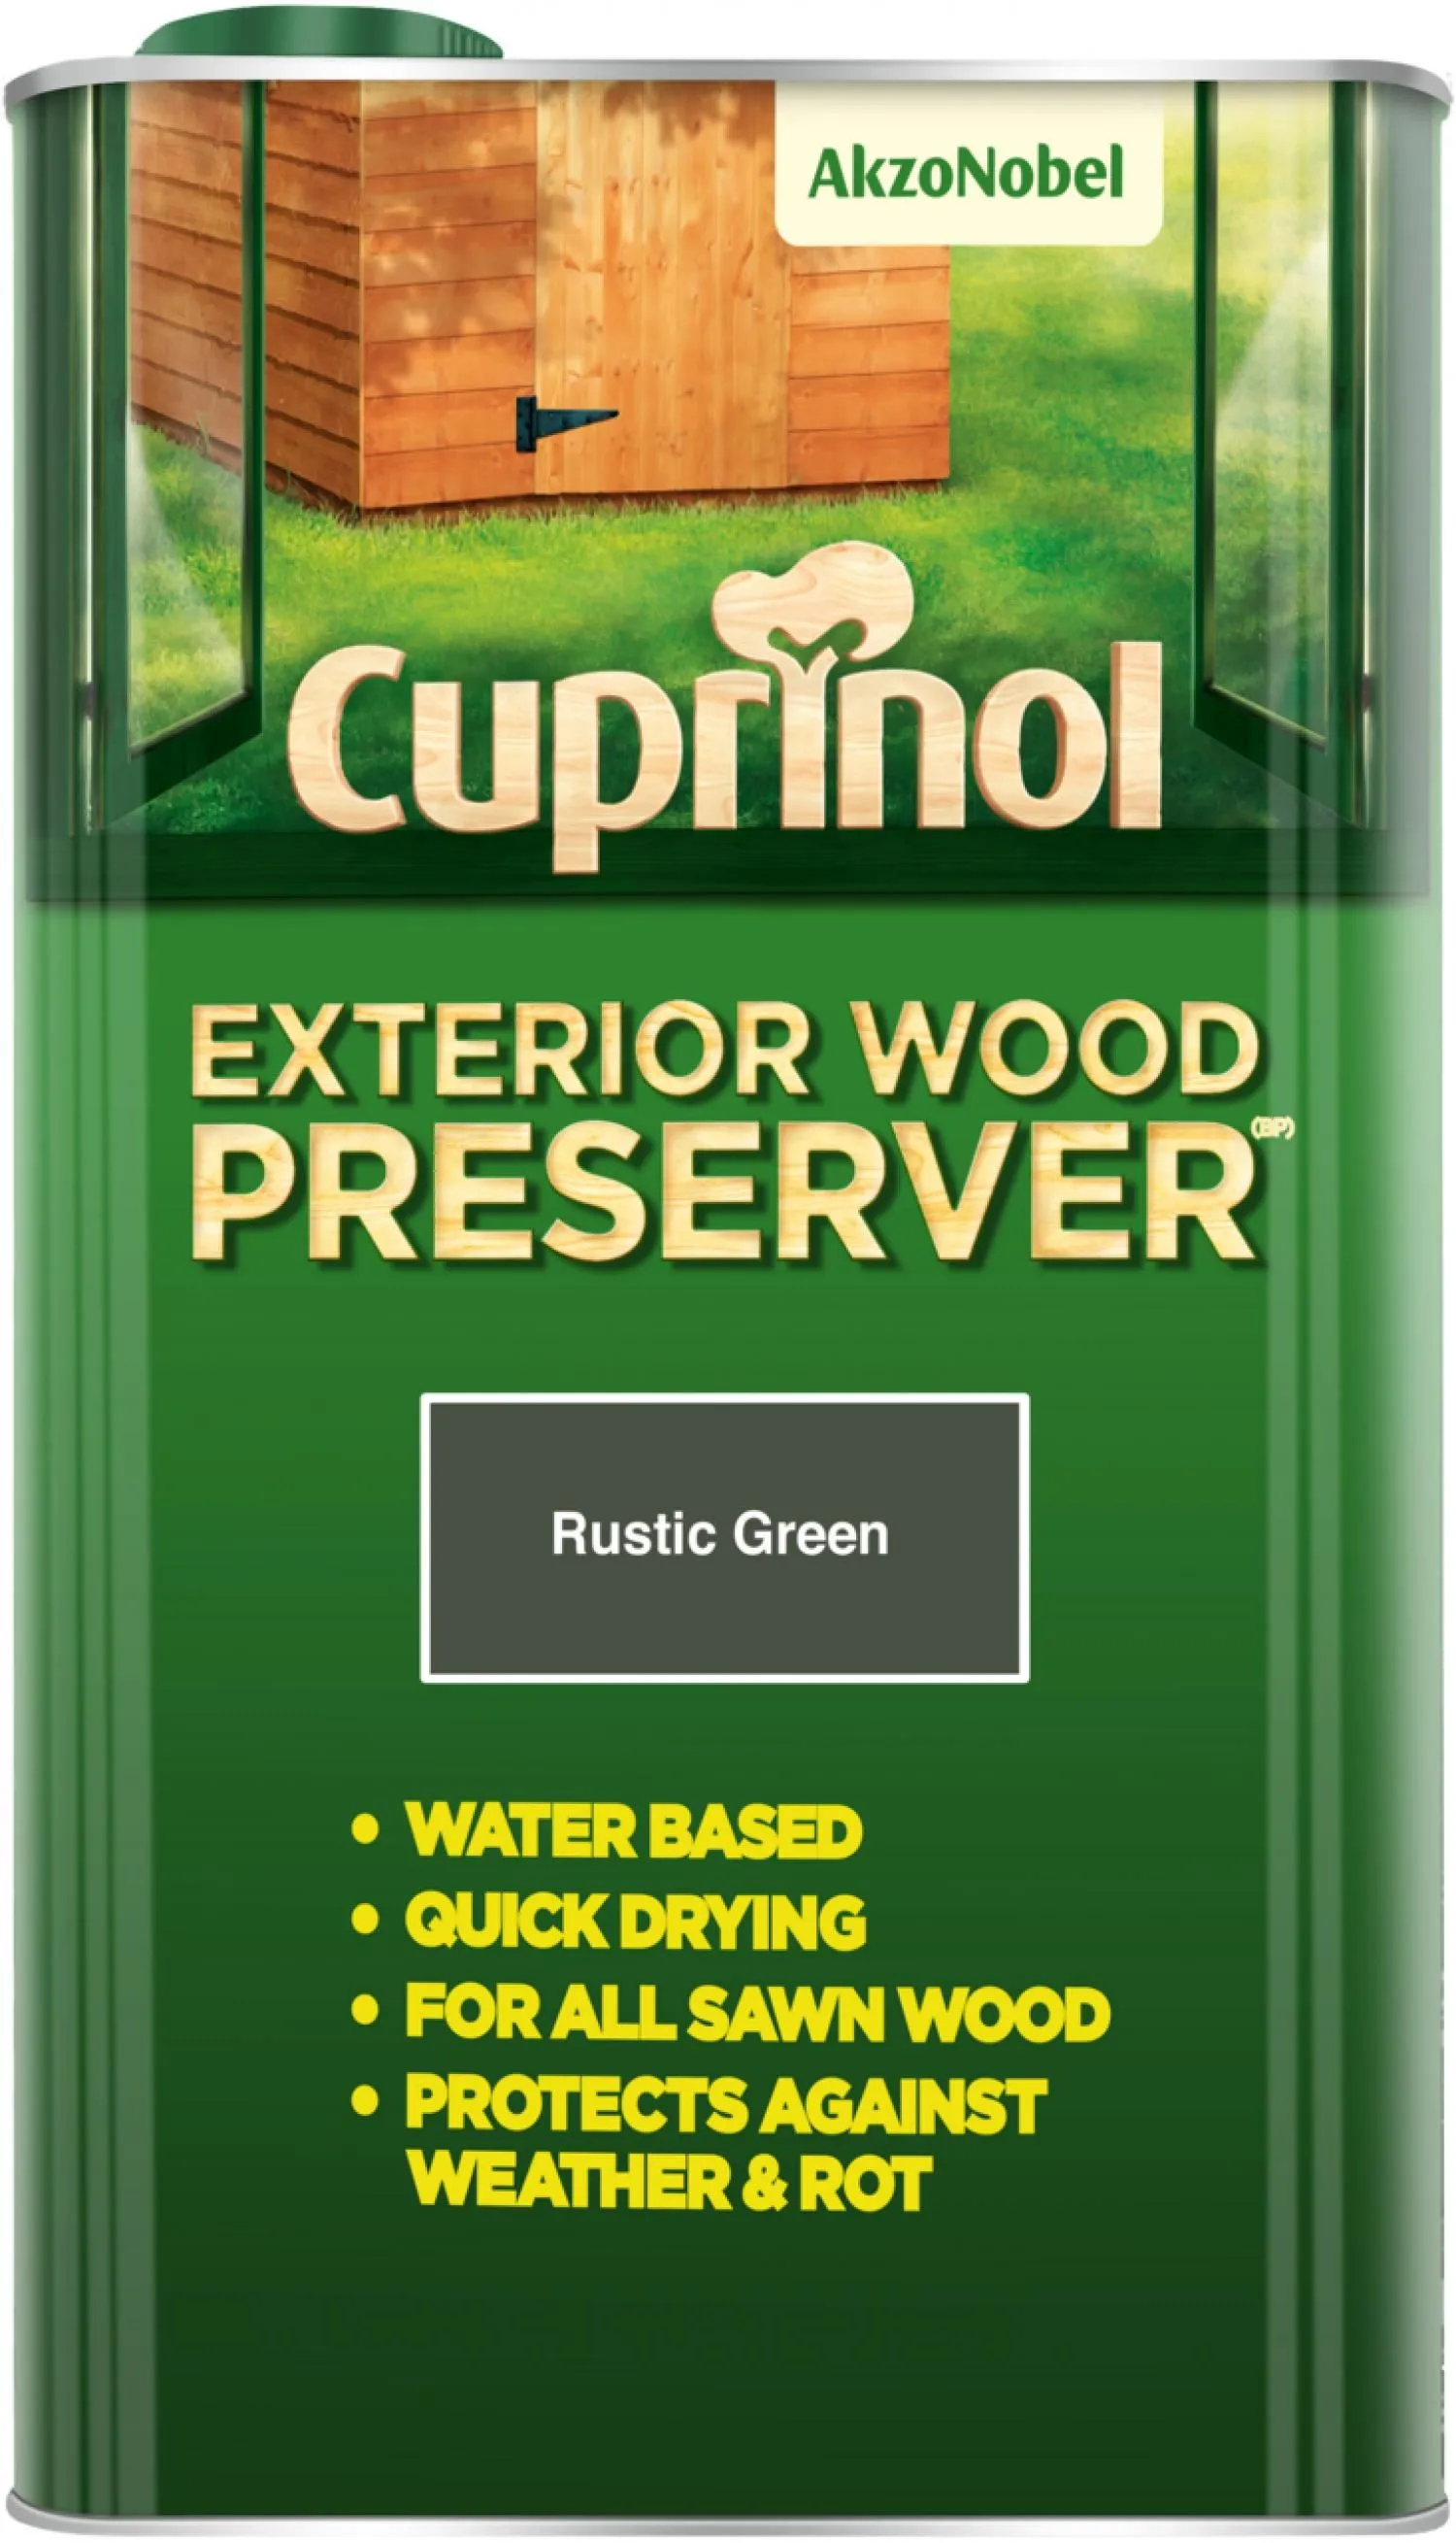 Cuprinol Exterior Wood Preserver (Rustic Green) 5ltr